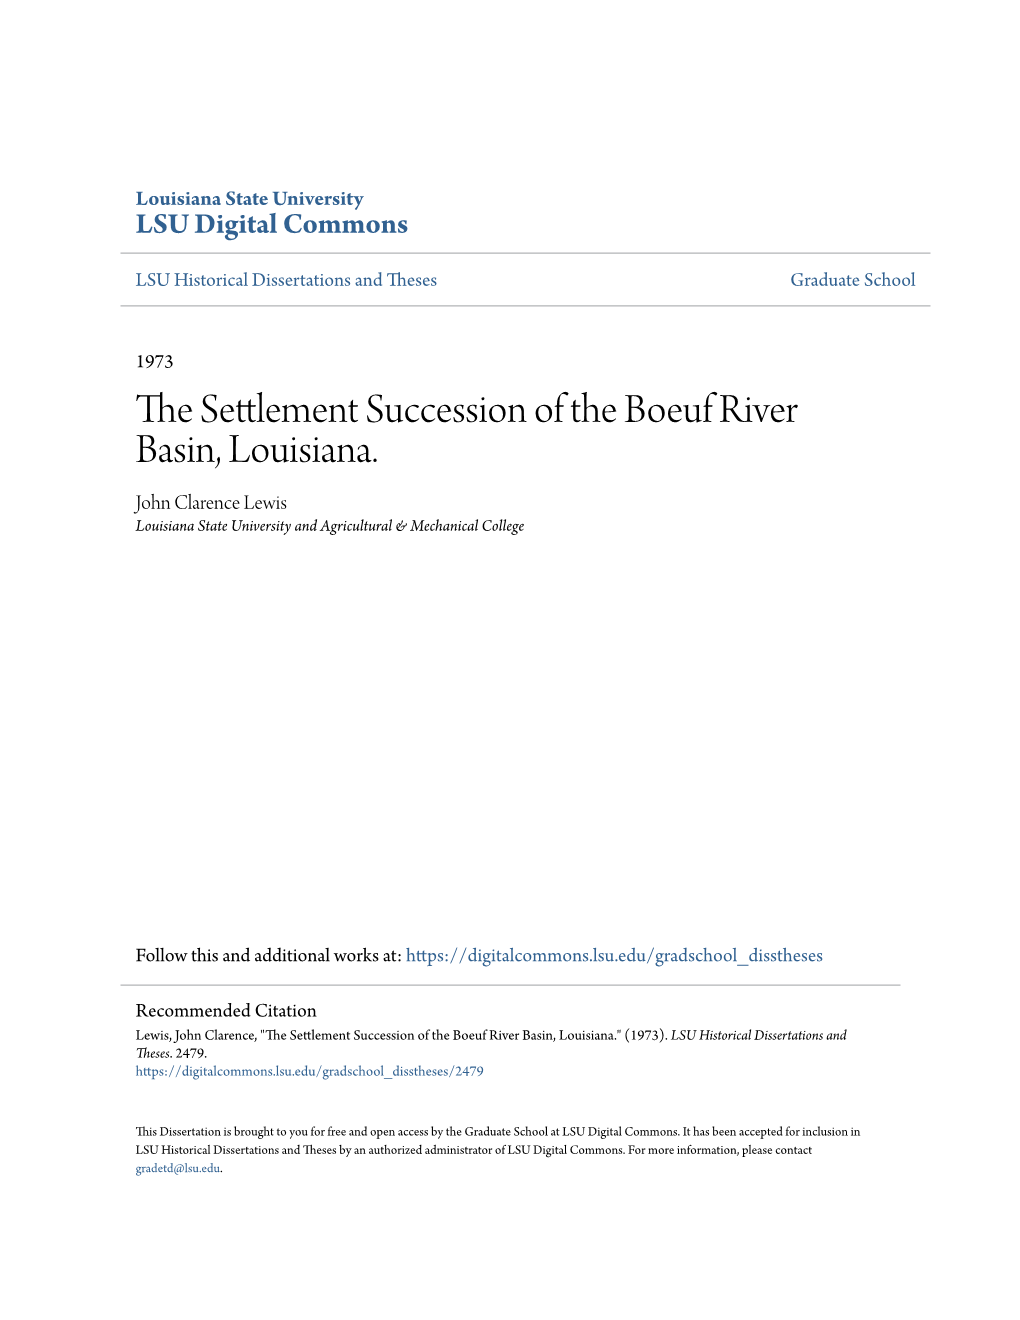 The Settlement Succession of the Boeuf River Basin, Louisiana